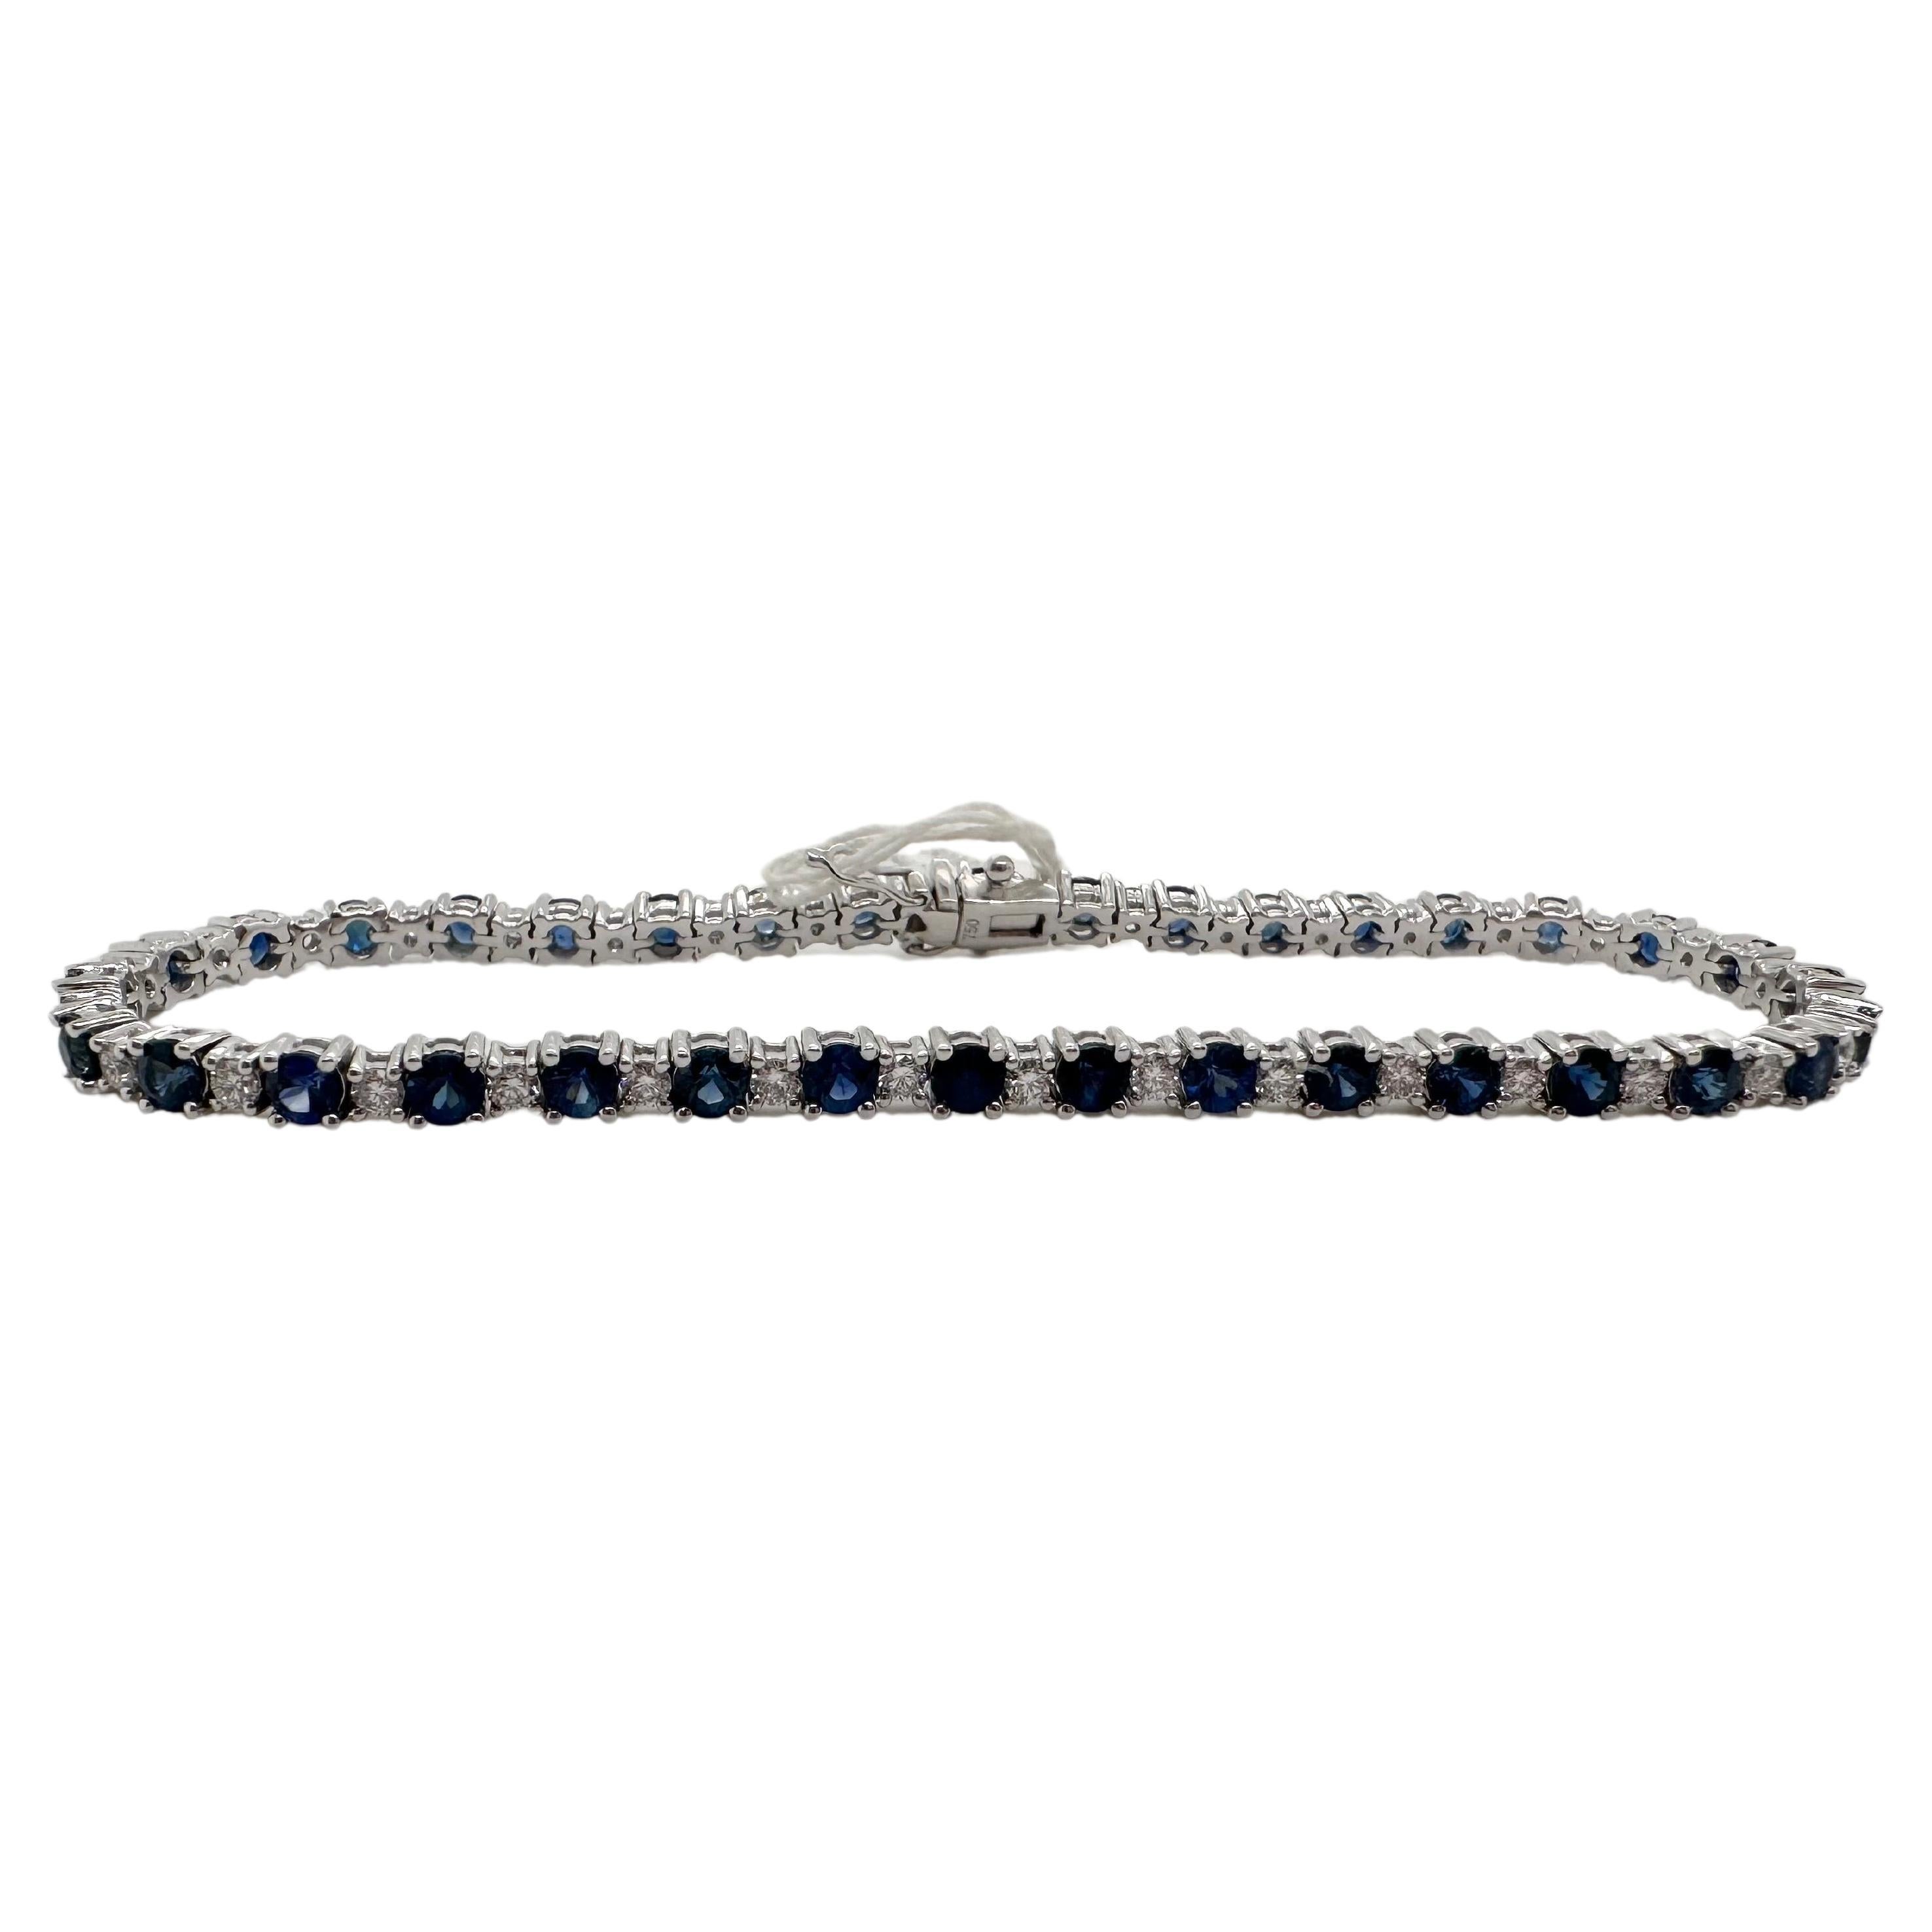 Sapphire & Diamond bracelet 18KT gold tennis bracelet